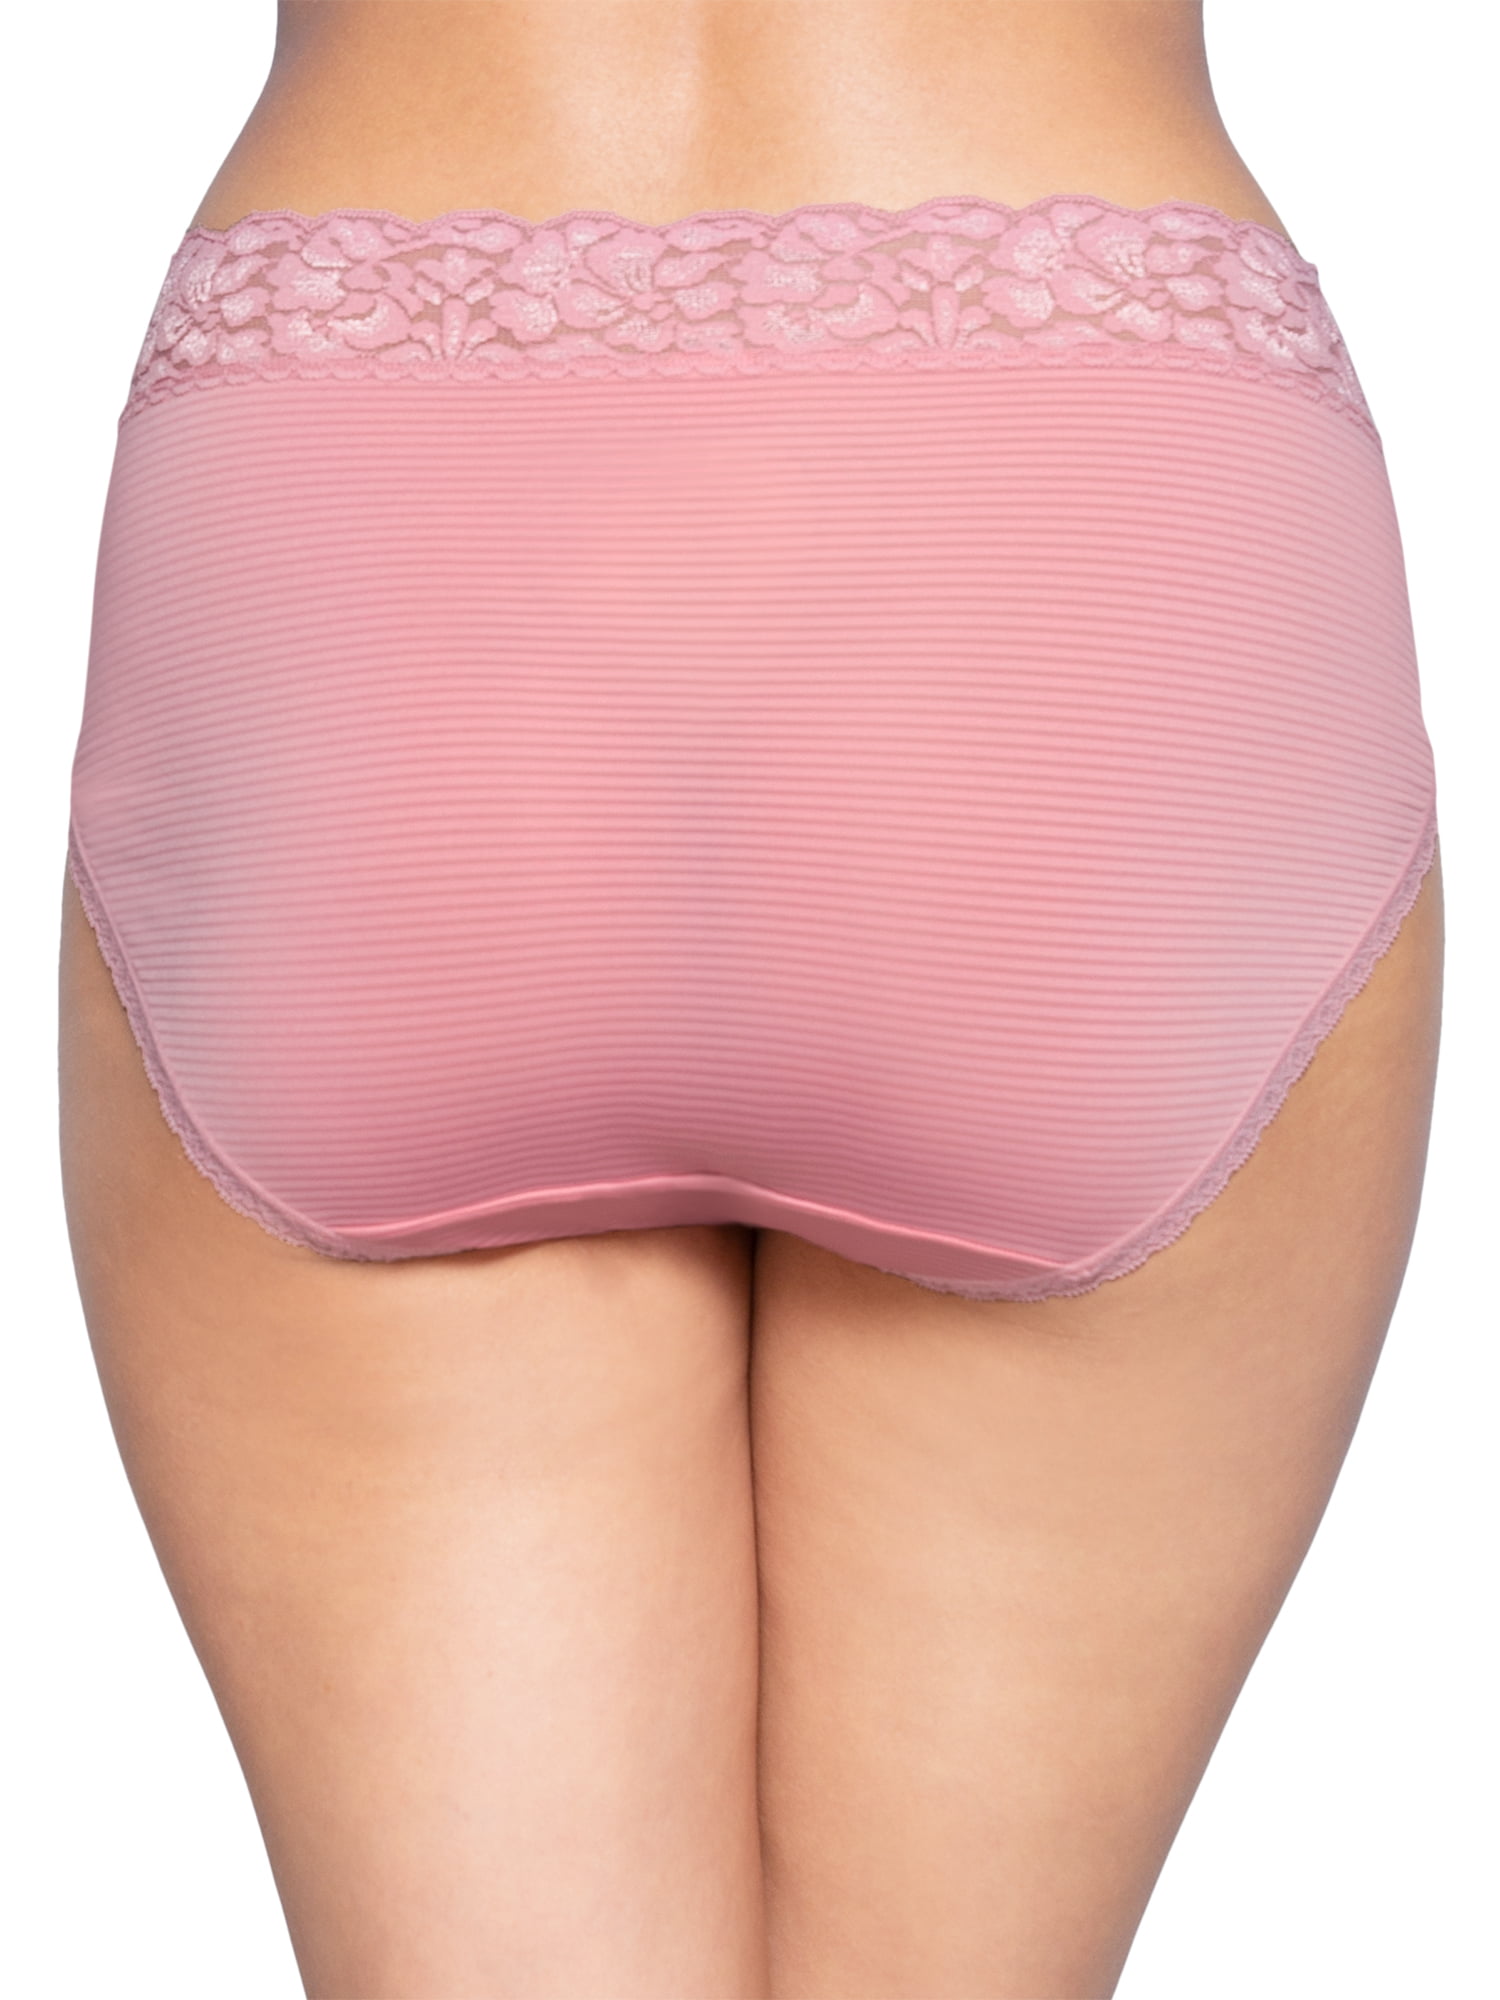 Women's Vanity Fair 13280 Flattering Lace Ultimate Comfort Hi-Cut Panty  (Seaside Mist Stripe 8) 